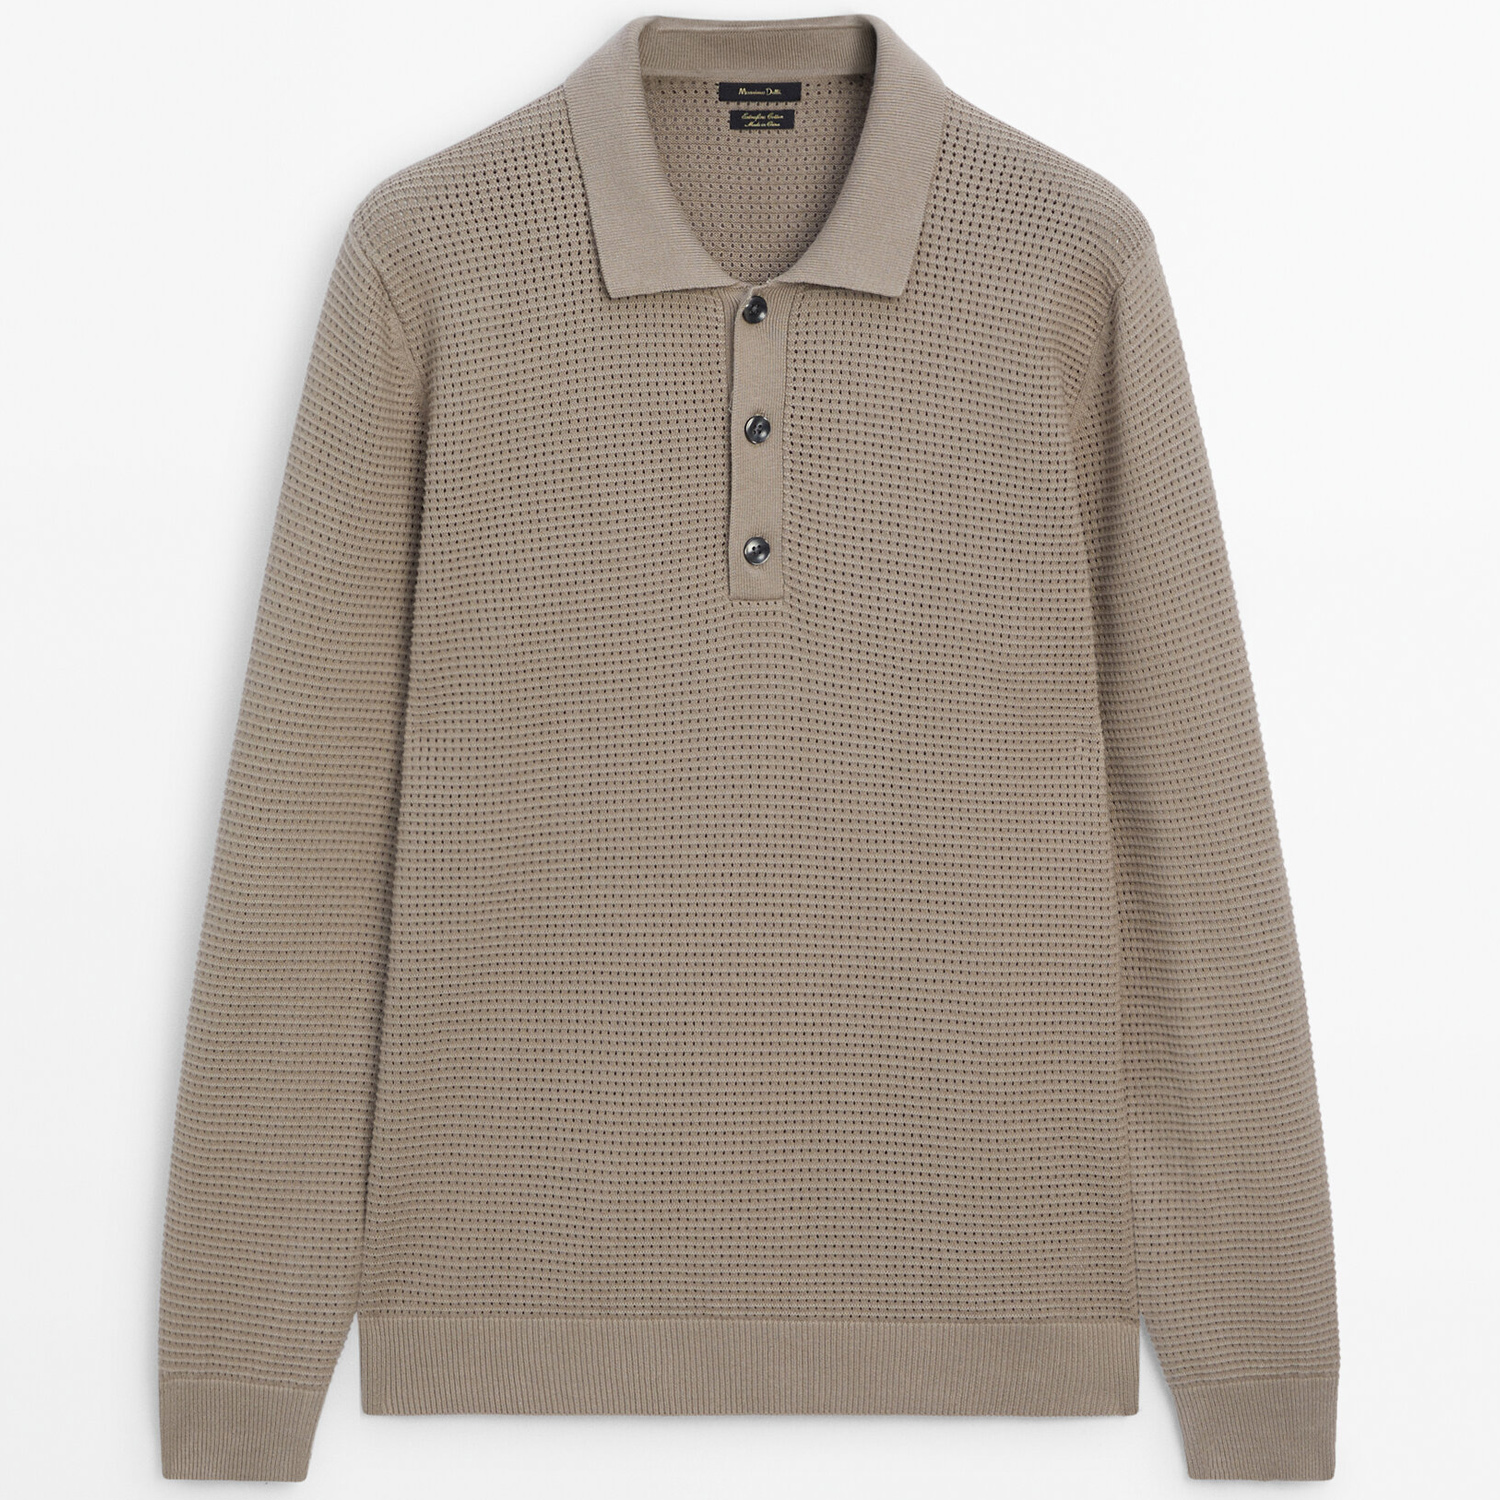 Свитер Massimo Dutti Textured Knit Polo Collar, светло-коричневый свитер zara knit with rhinestone polo collar светло розовый